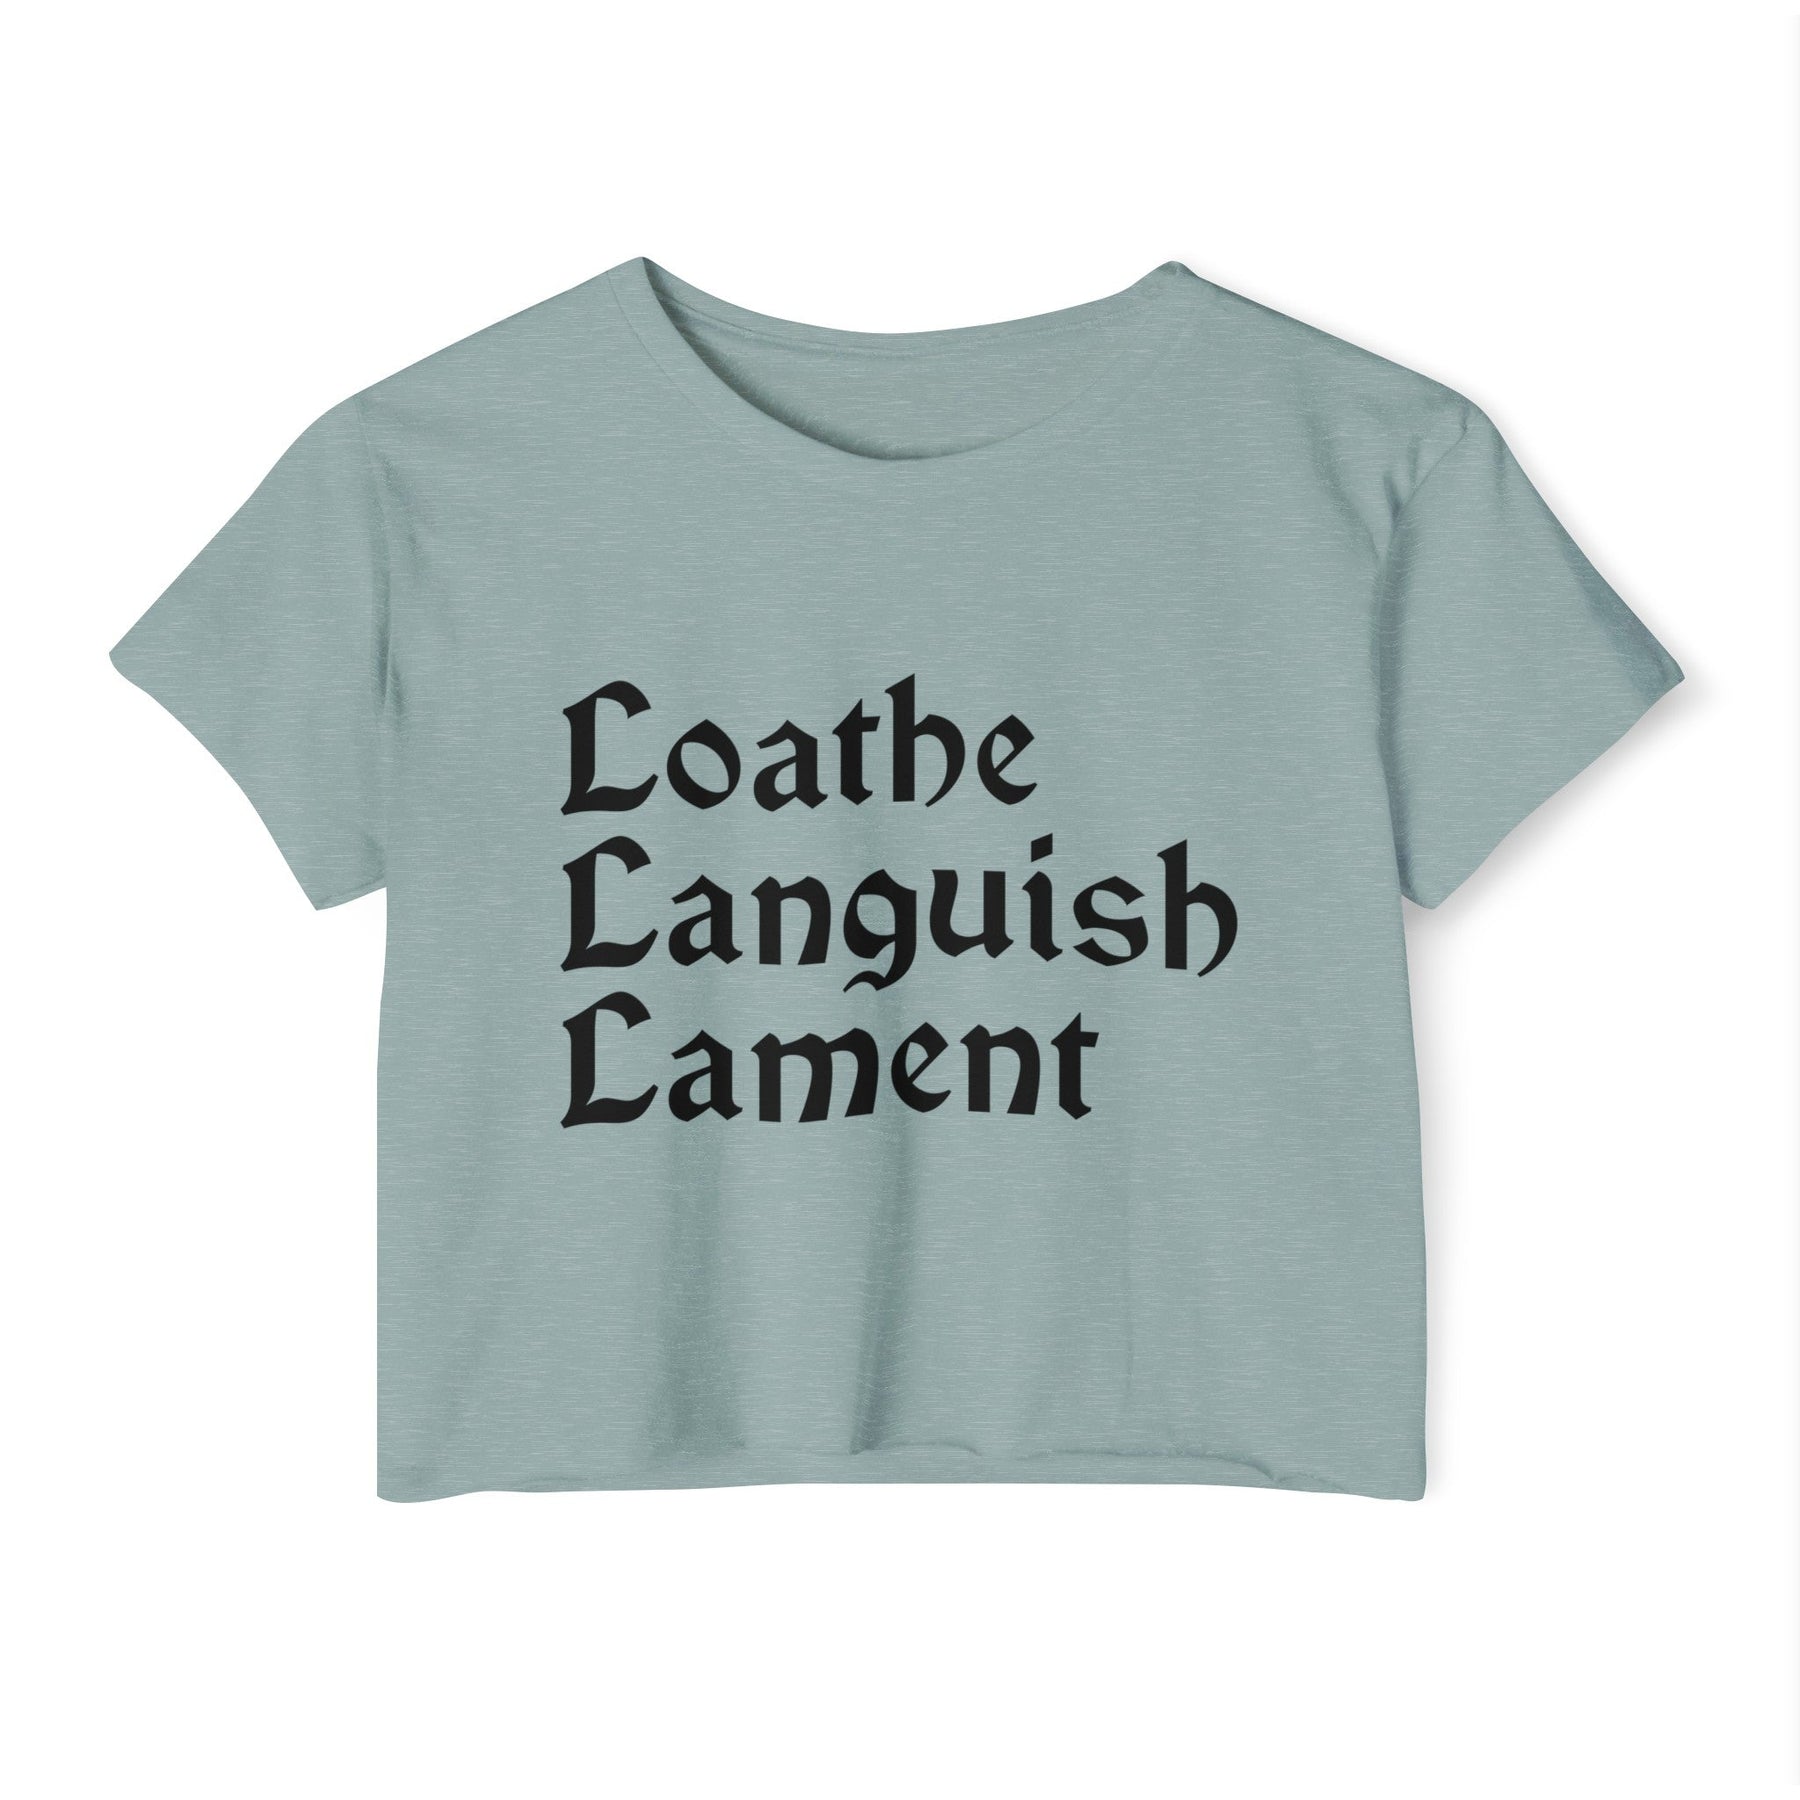 Loathe Languish Lament Stacked Women's Lightweight Crop Top - Goth Cloth Co.T - Shirt23600830262435742534